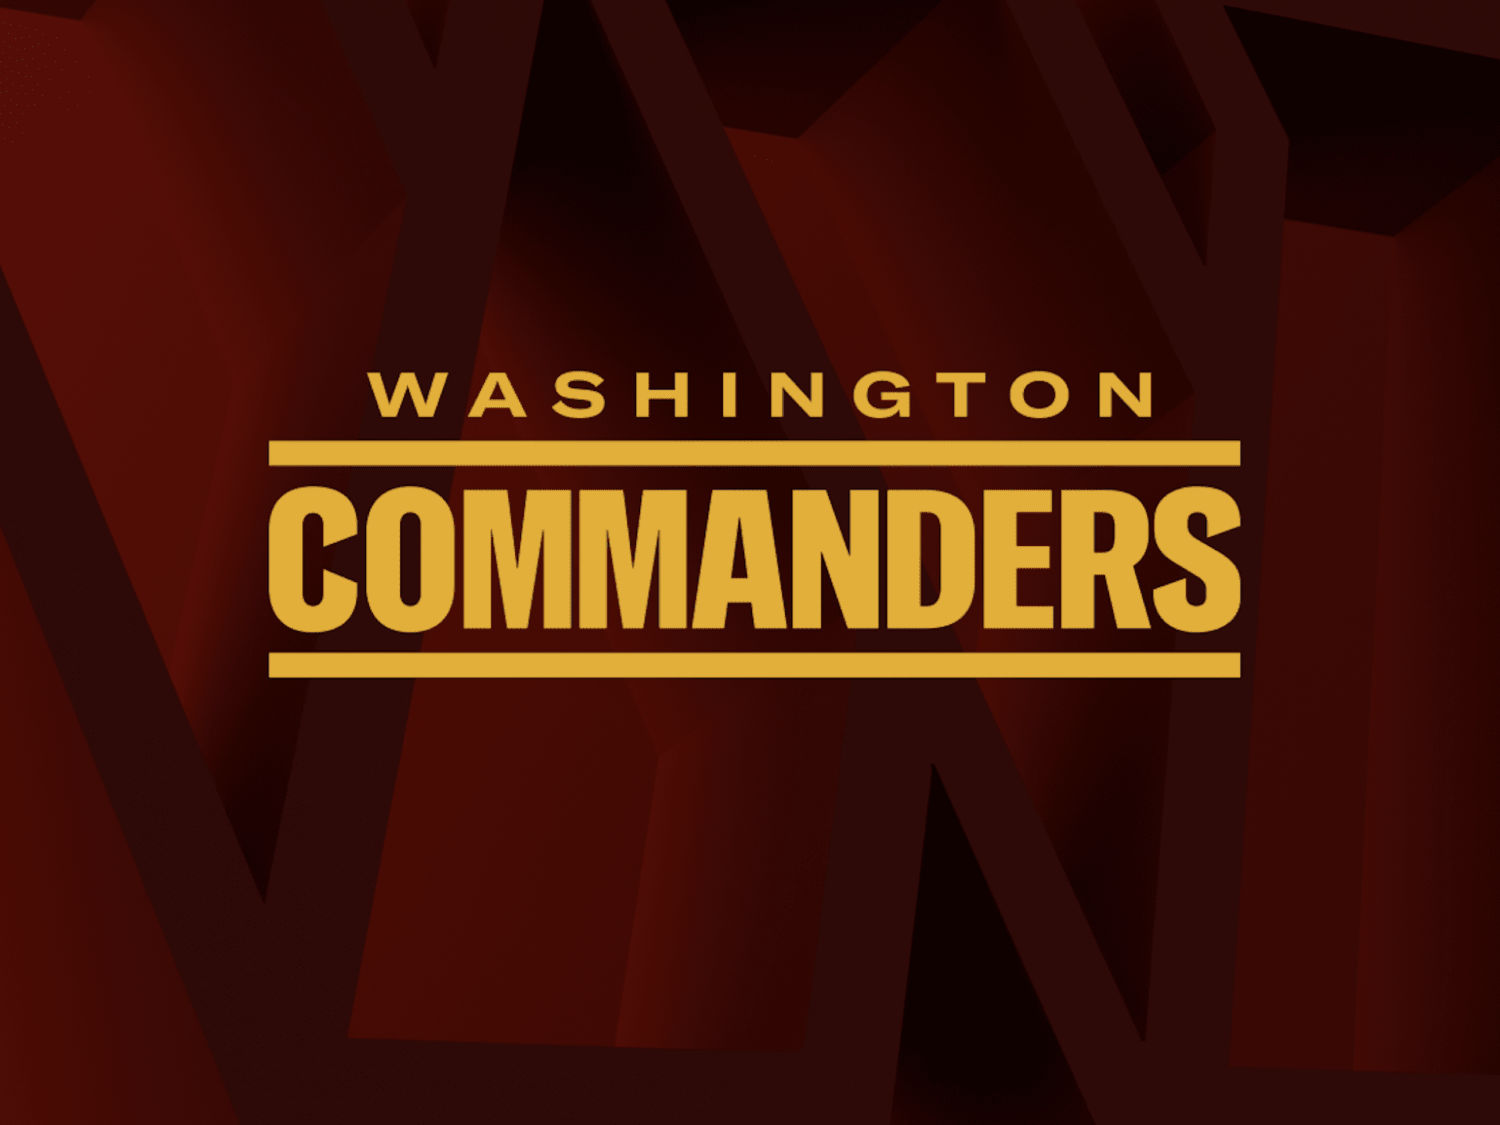 Logos of the Commanders of Washington / Wortmarket